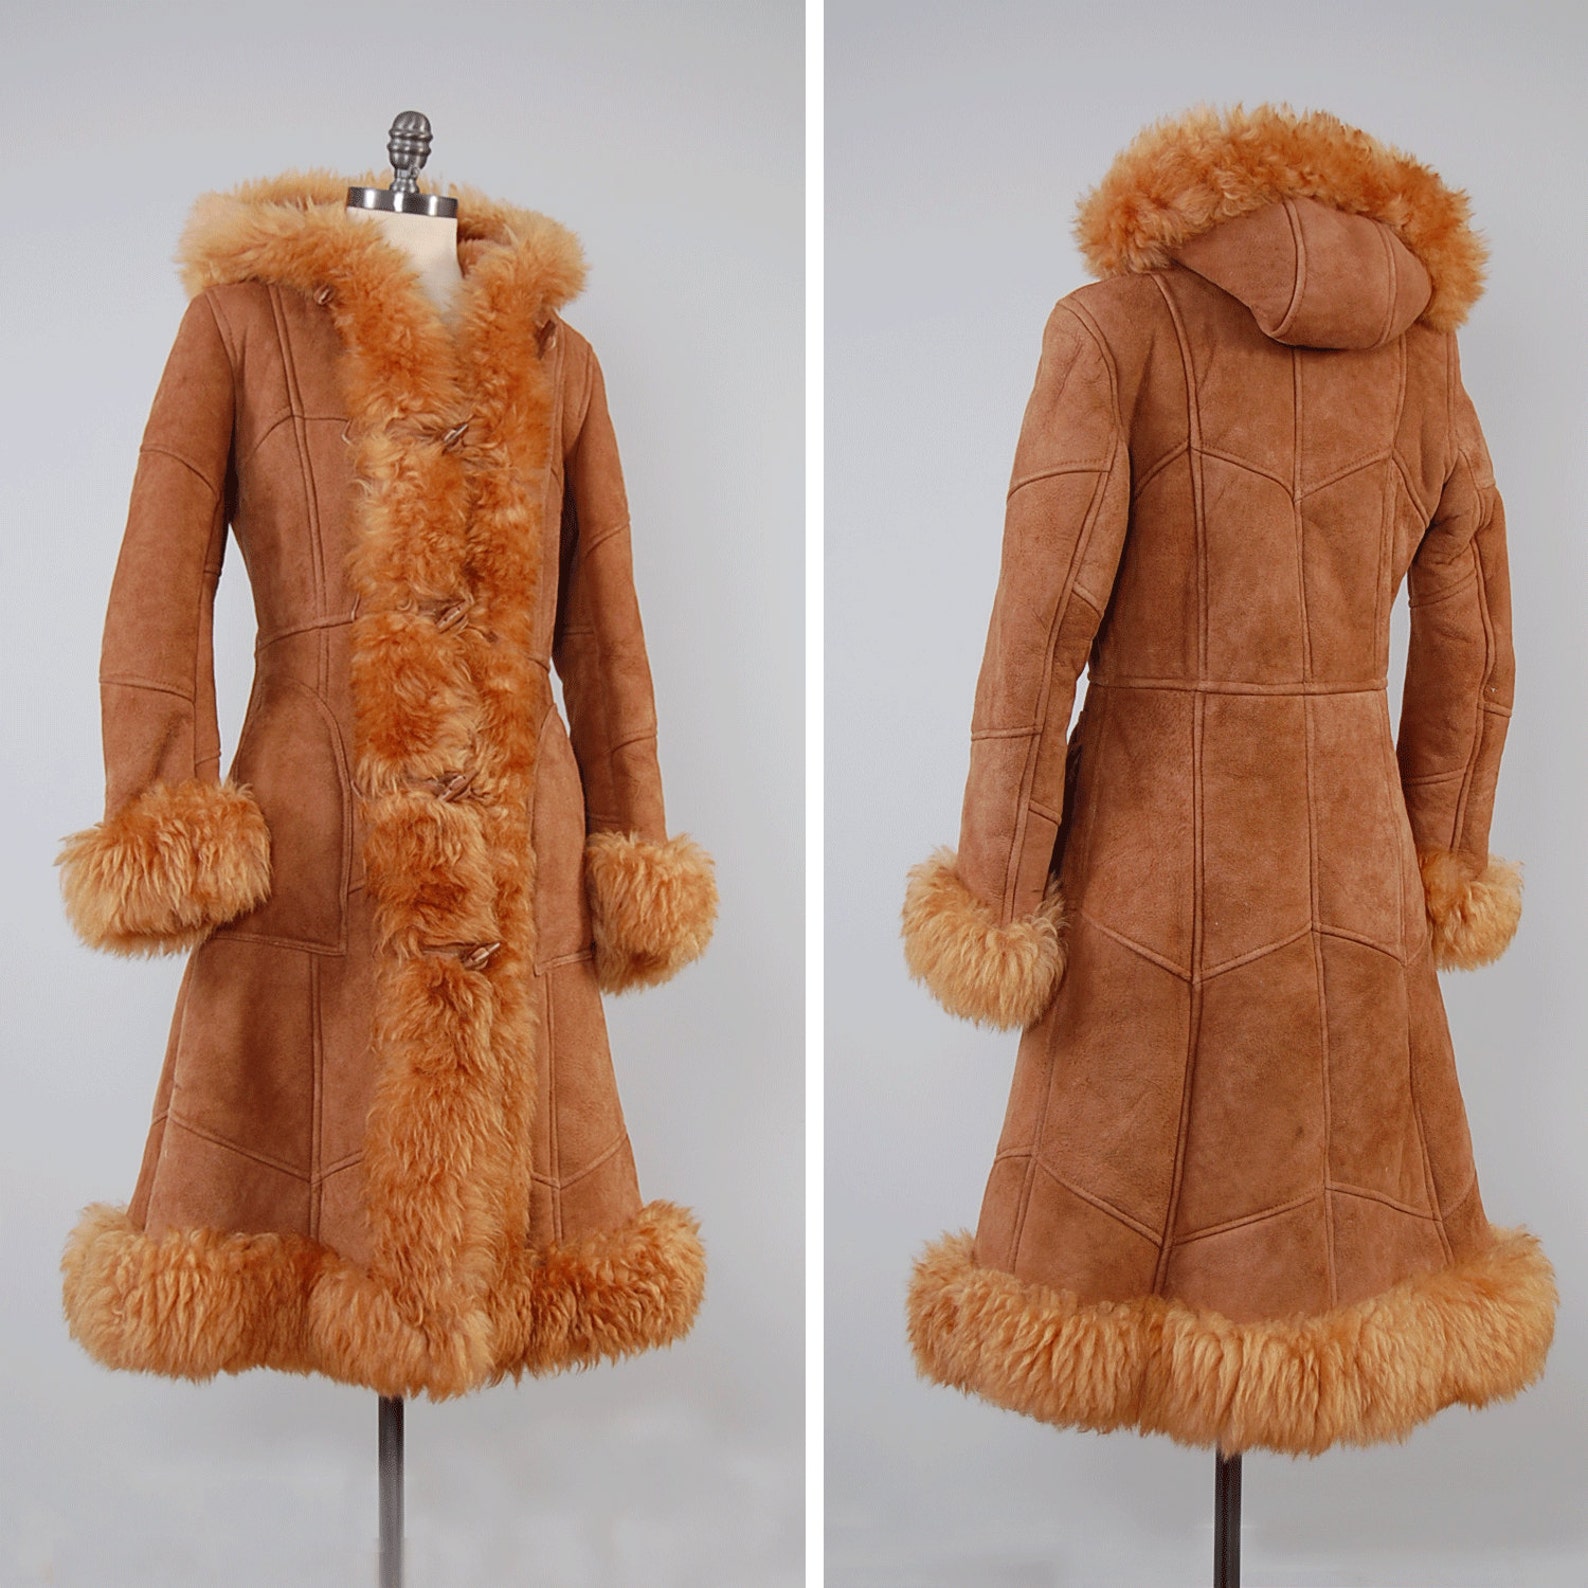 Vintage 60s 70s sheepskin SHEARLING fur coat with HOOD / | Etsy